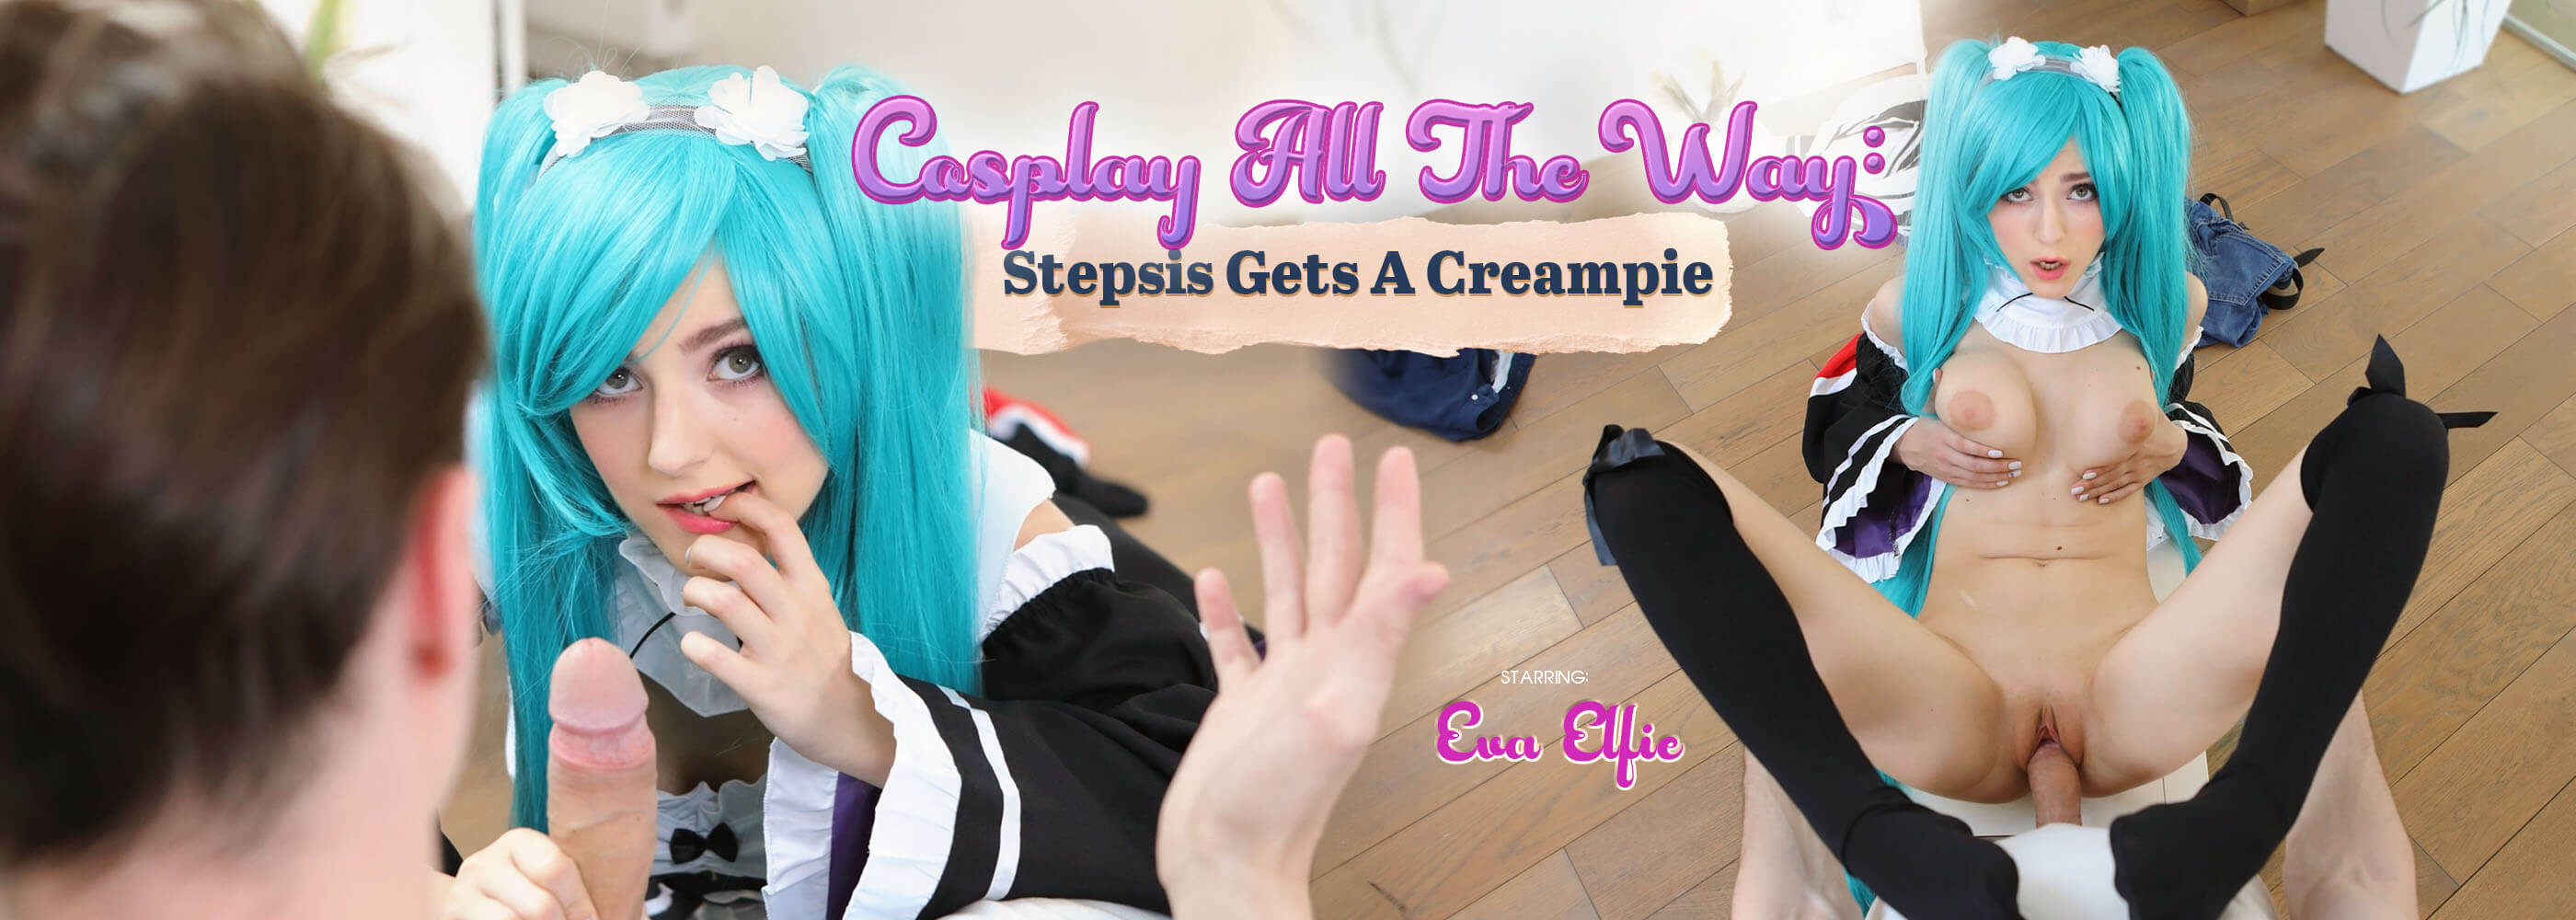 Cosplay All The Way: Stepsis Gets A Creampie - VR Porn Video, Starring: Eva Elfie